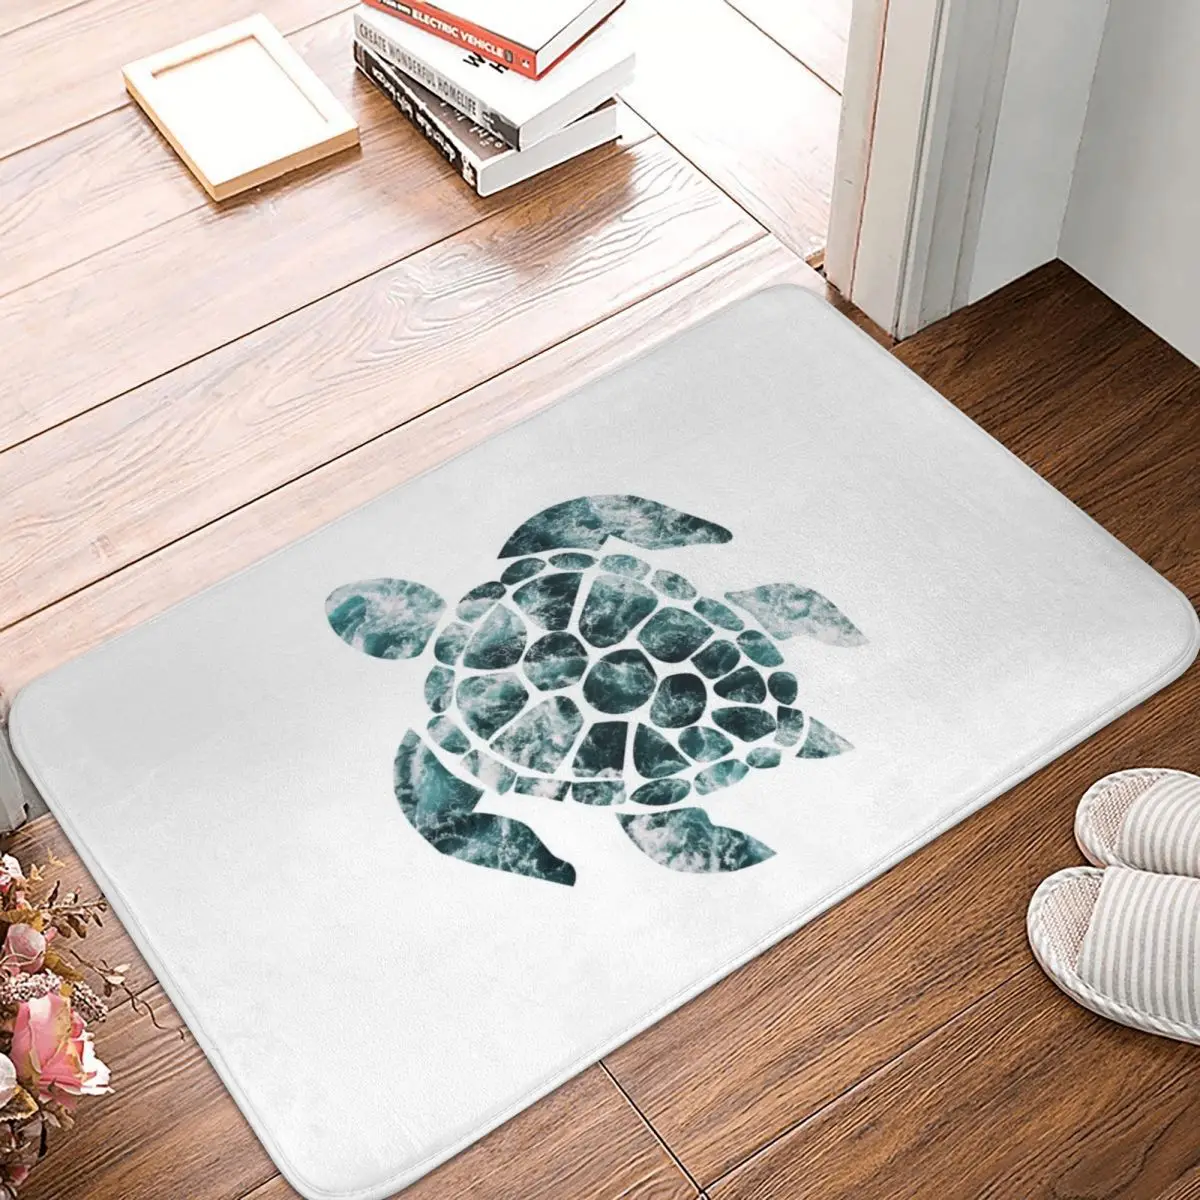 

Sea Turtle Turquoise Ocean Waves Doormat Carpet Mat Rug Polyester Non-Slip Floor Decor Bath Bathroom Kitchen Living Room 40x60